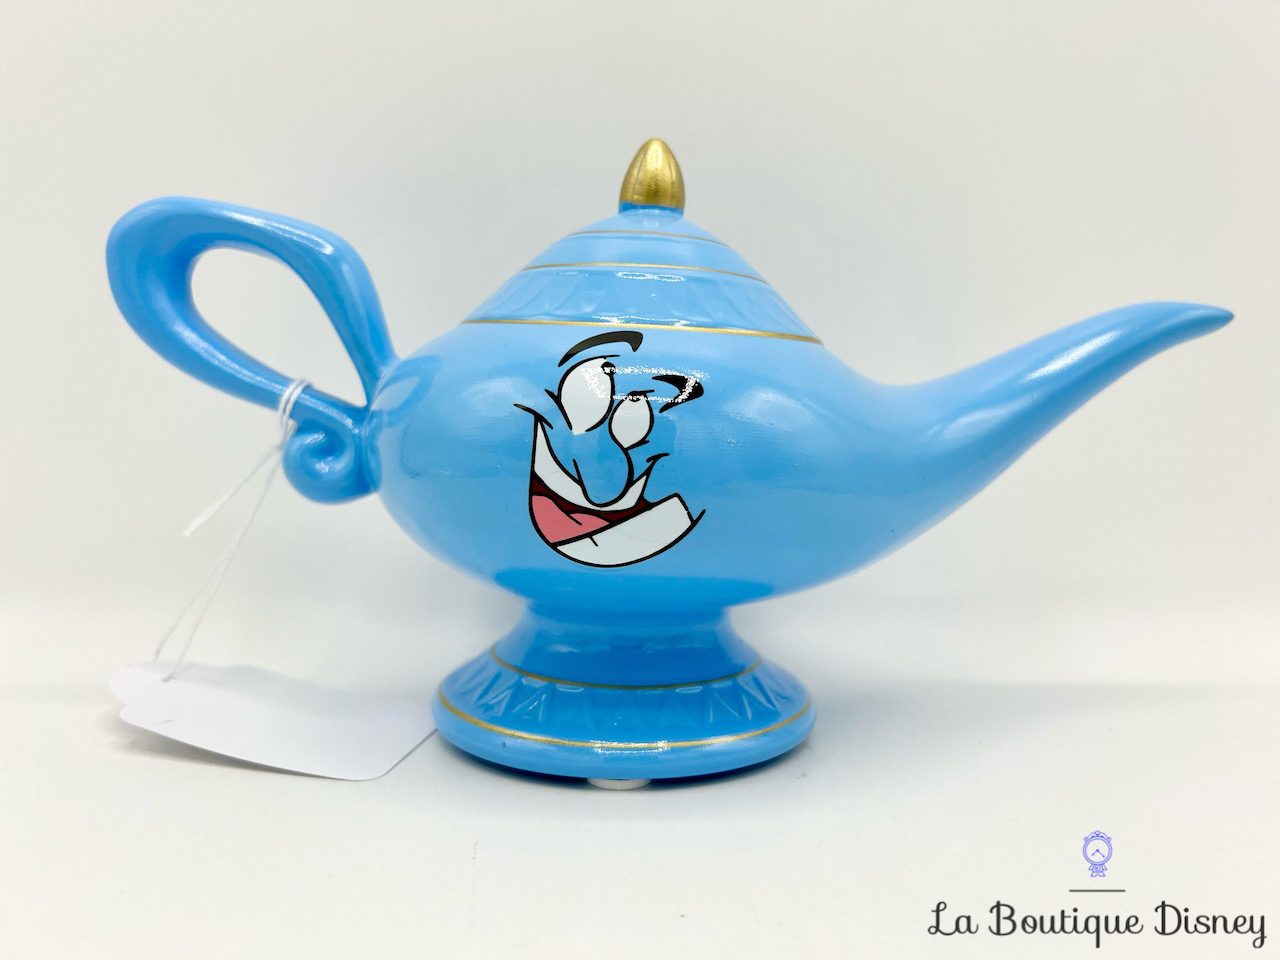 Tirelire Lampe Génie Aladdin Disney Primark céramique bleu